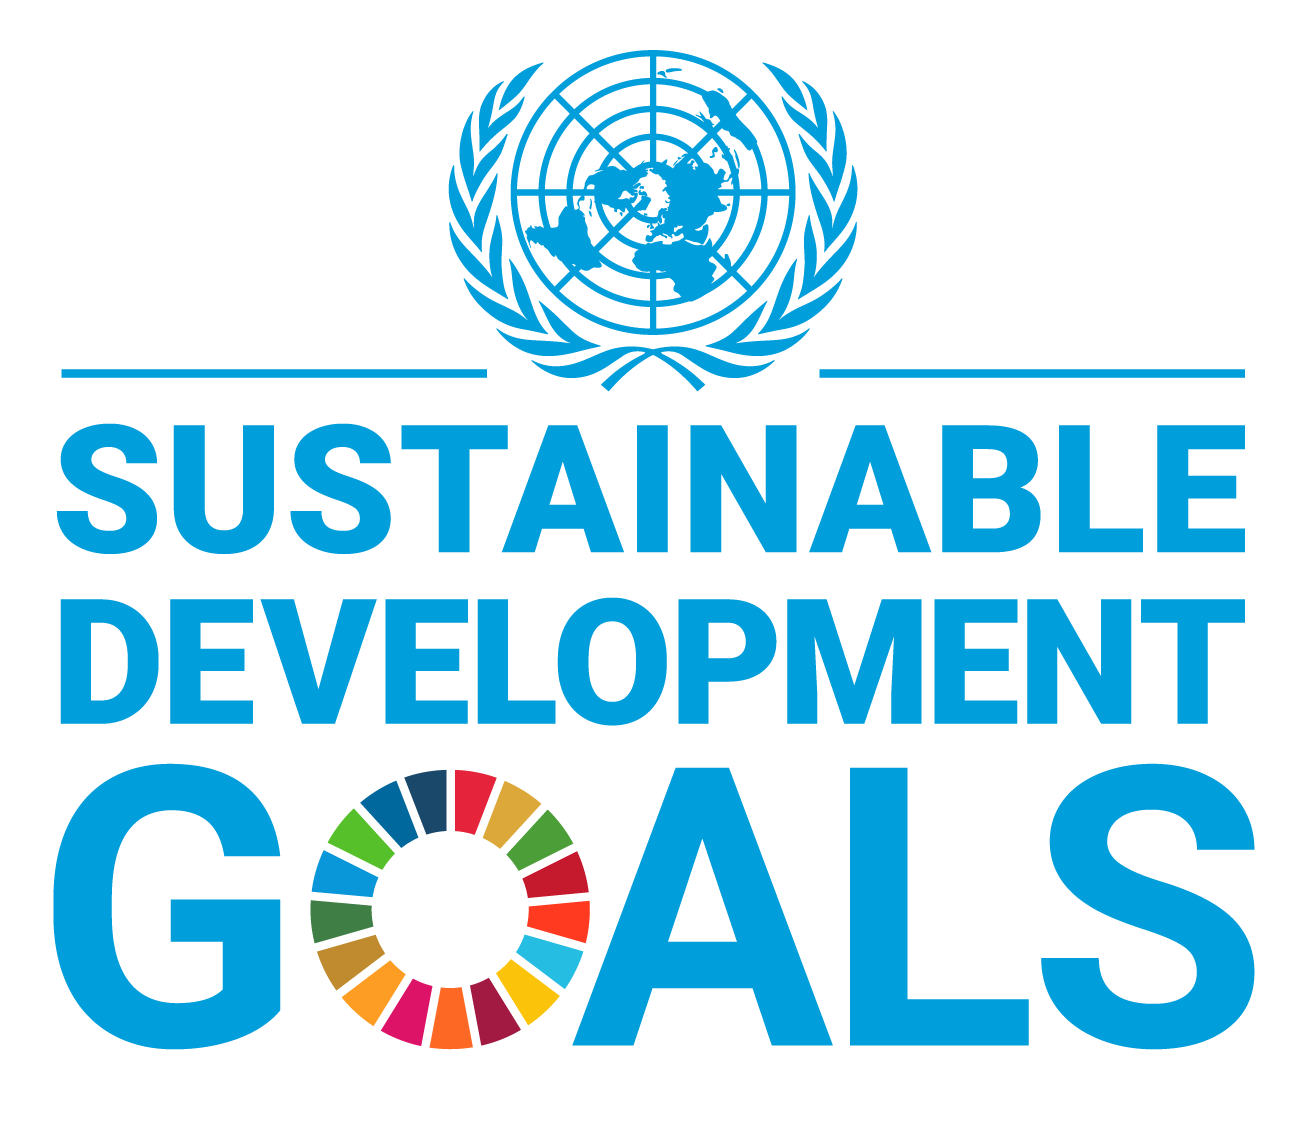 E_SDG_logo_UN_emblem_square_trans_WEB